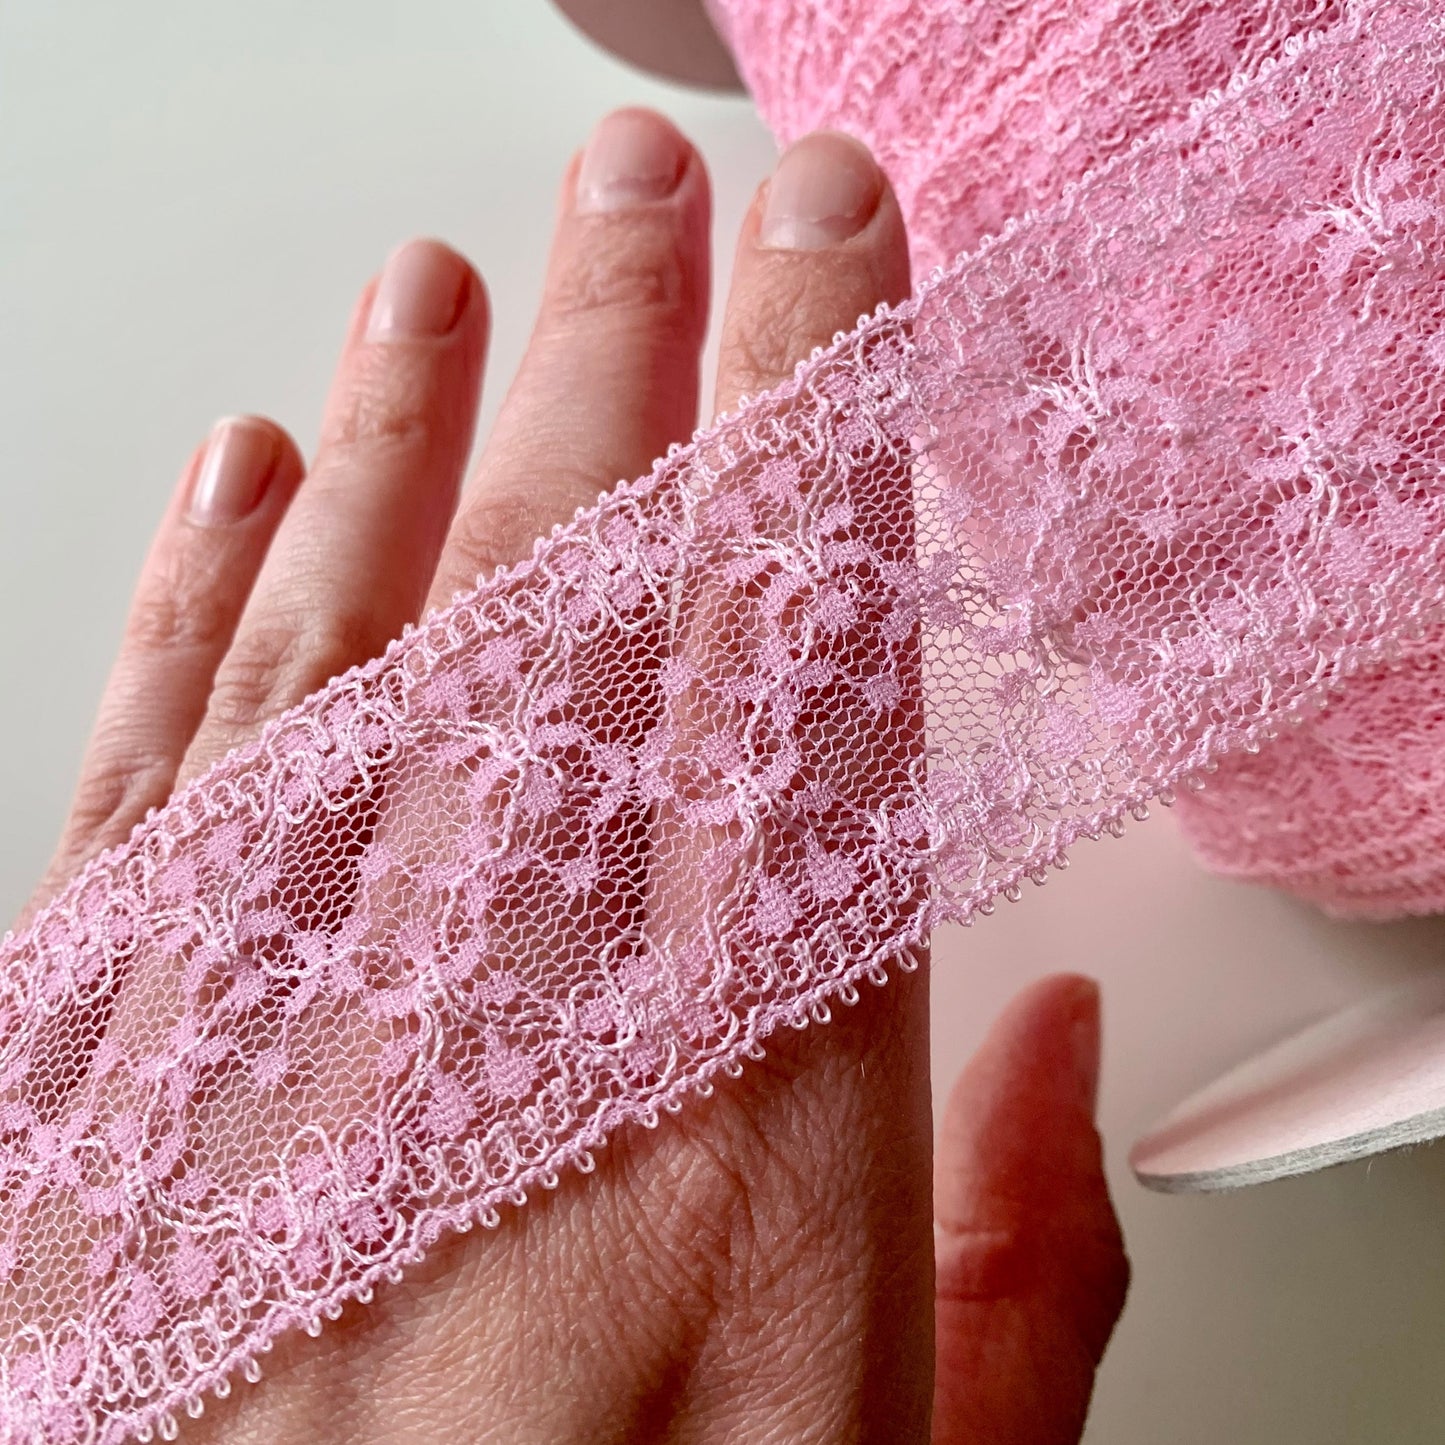 Rigid Nottingham Lace Trim by the Metre | 4.5cm wide | Pink floral lace | Lingerie Sewing Supplies | Price per metre